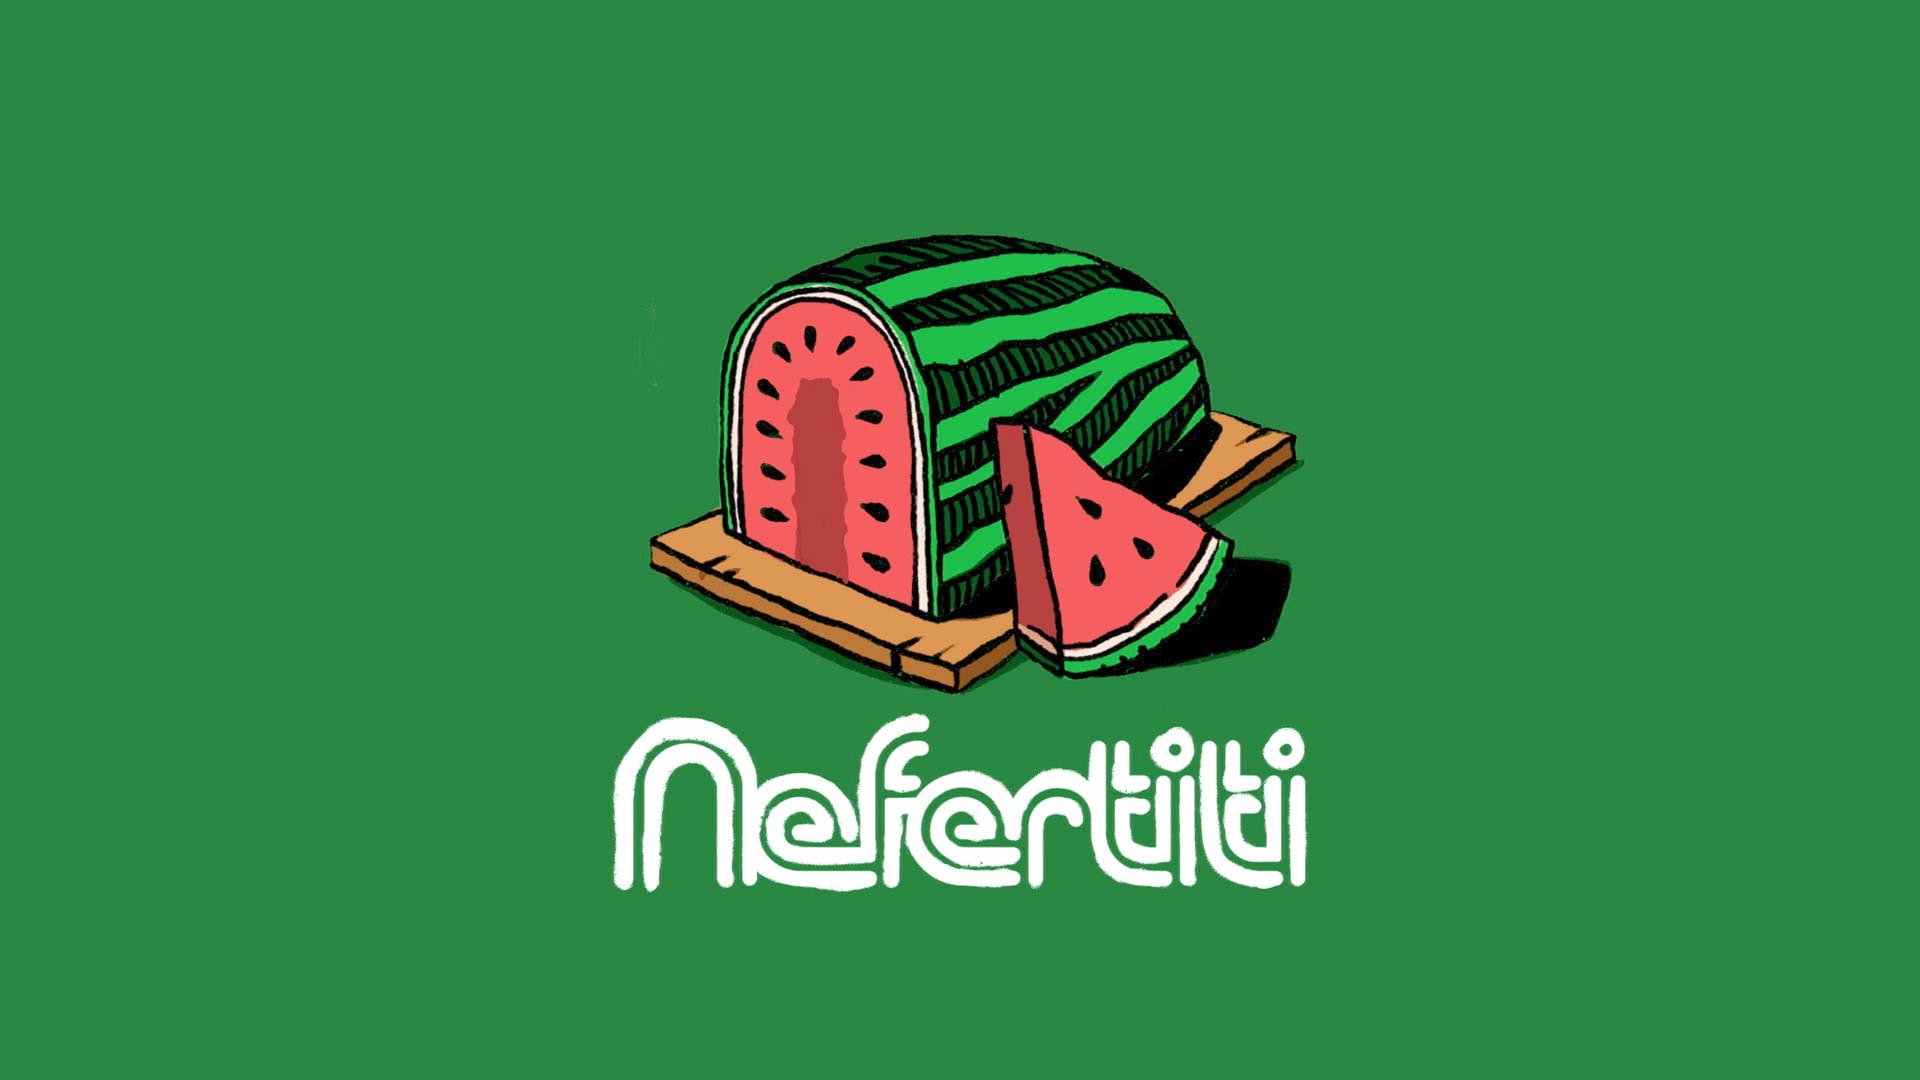 Nefertiti nyöppnar med festivalvibbar hela sommaren